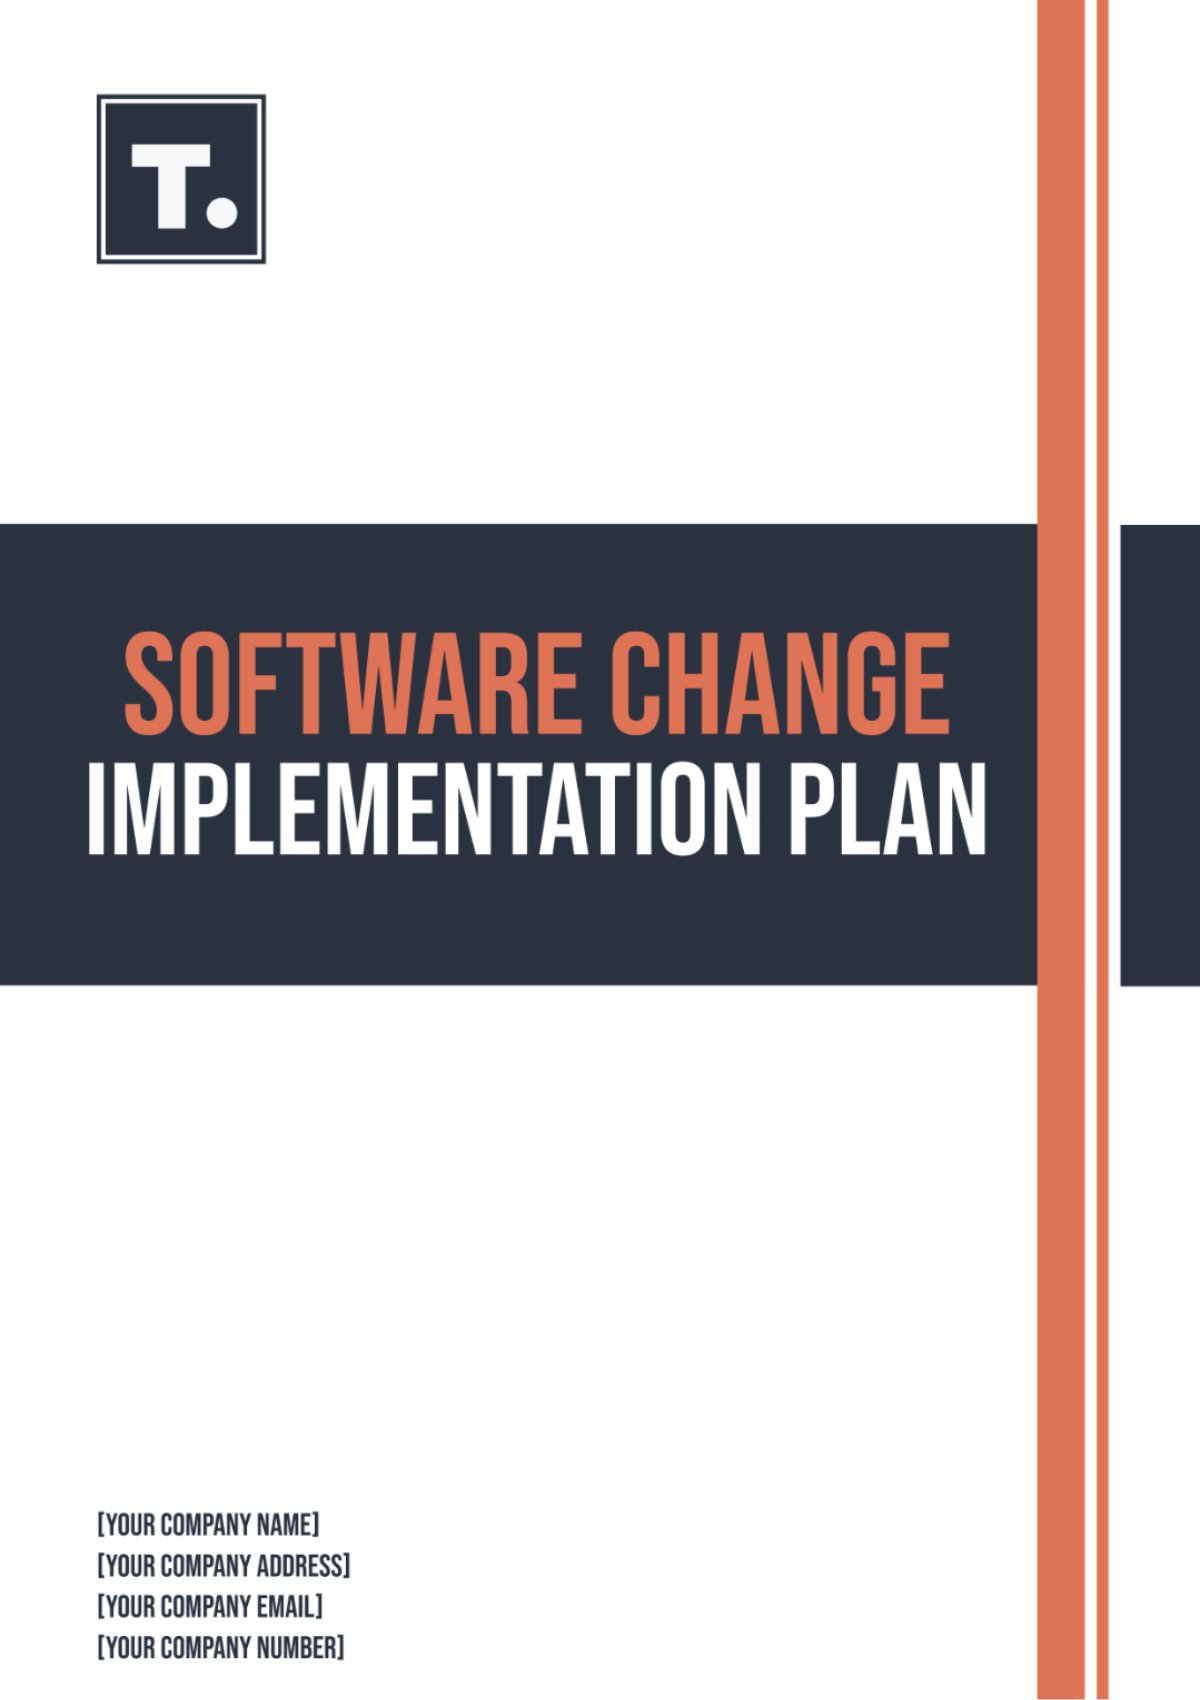 Software Change Implementation Plan Template